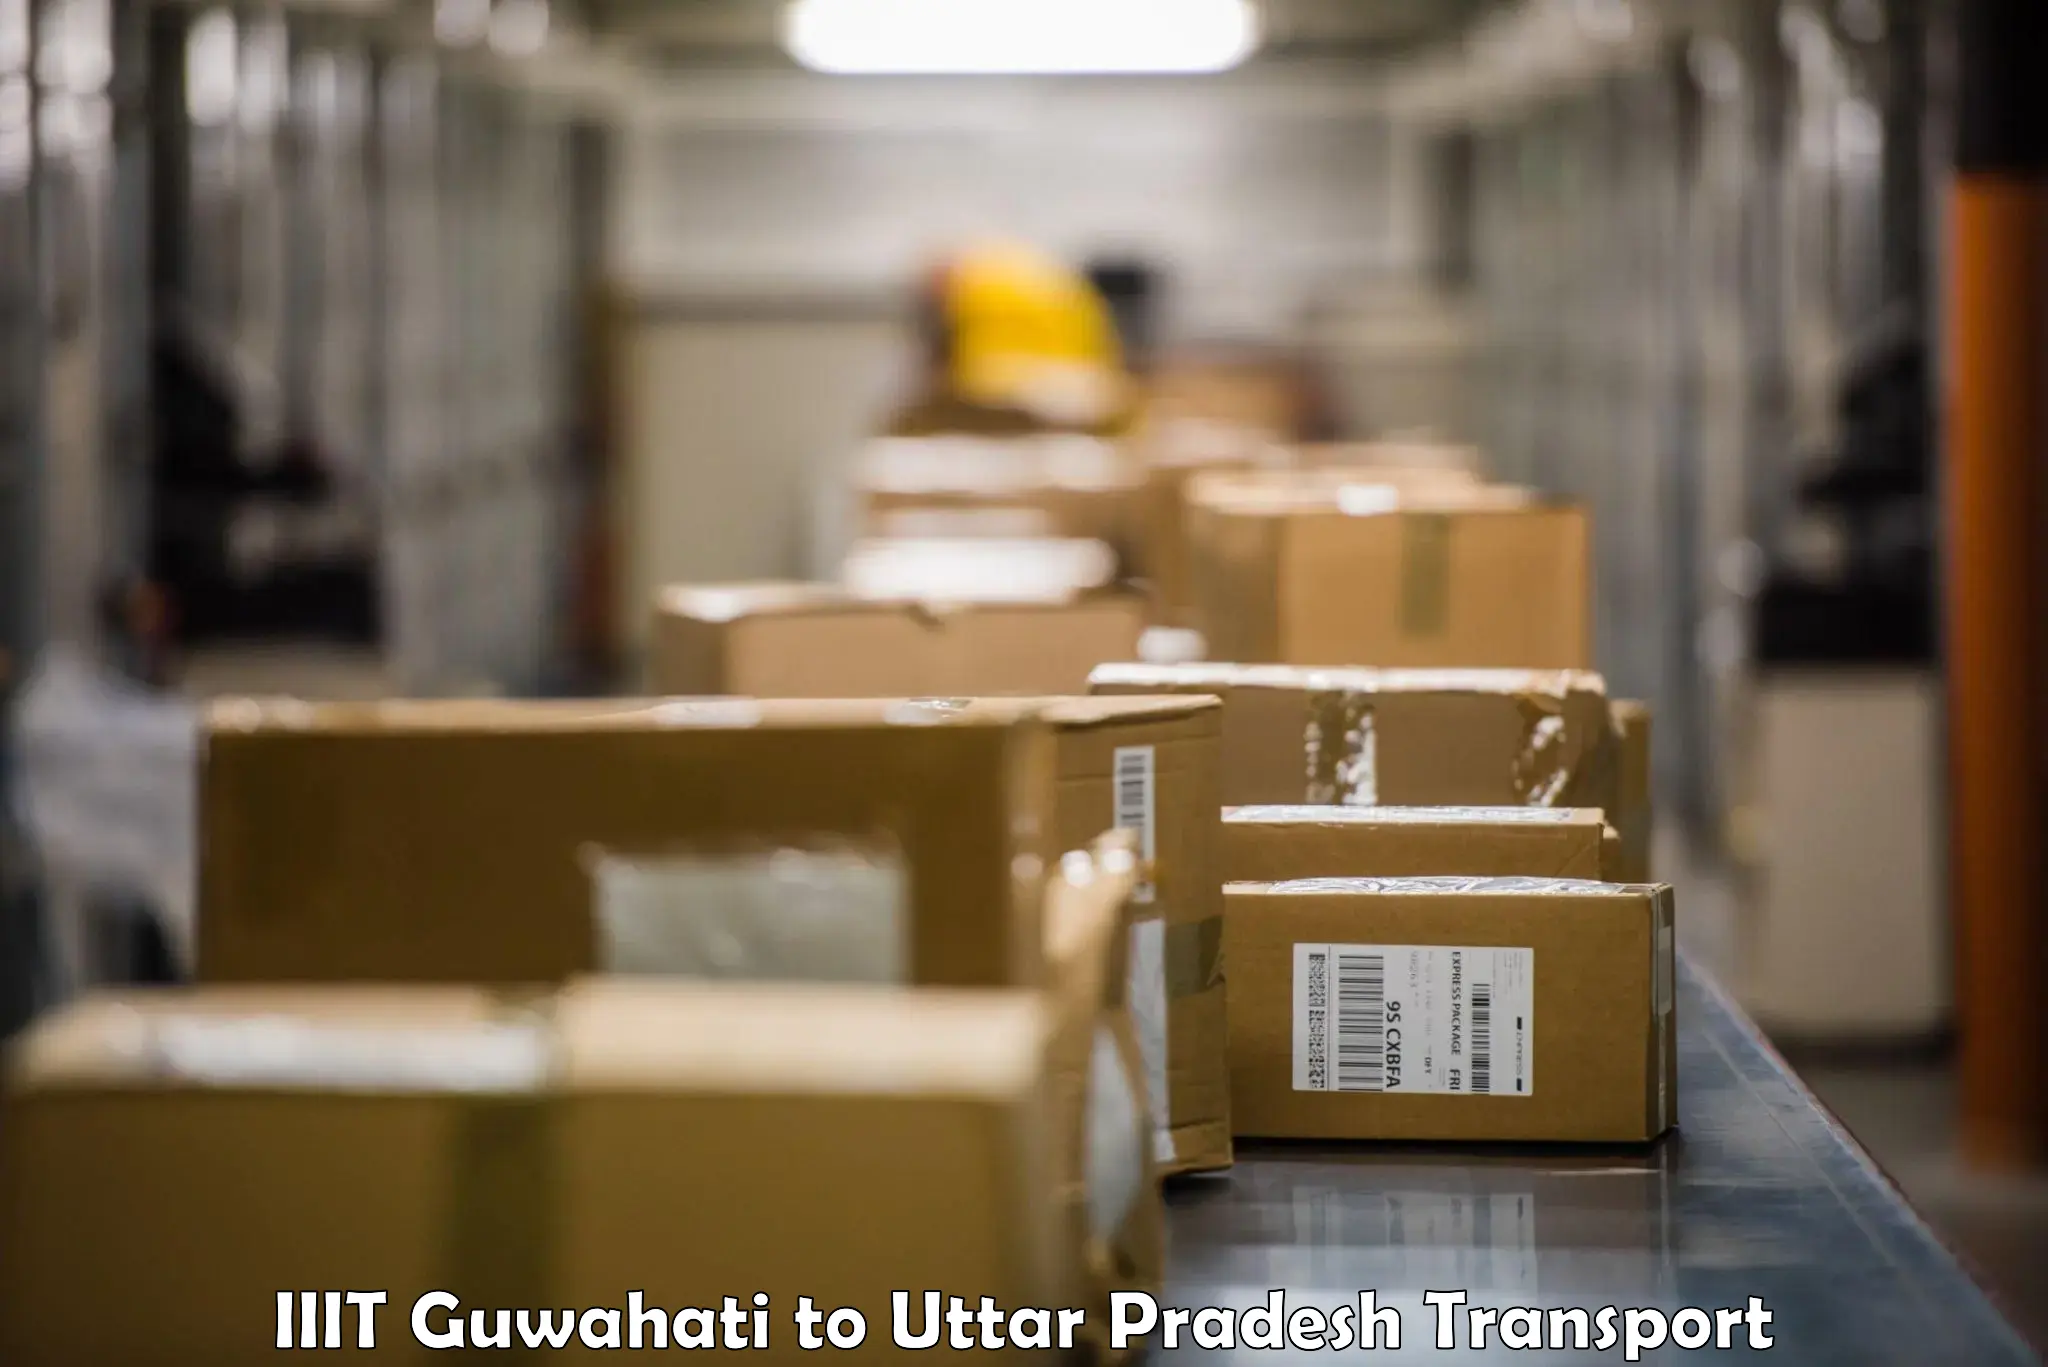 Truck transport companies in India in IIIT Guwahati to Fatehpur